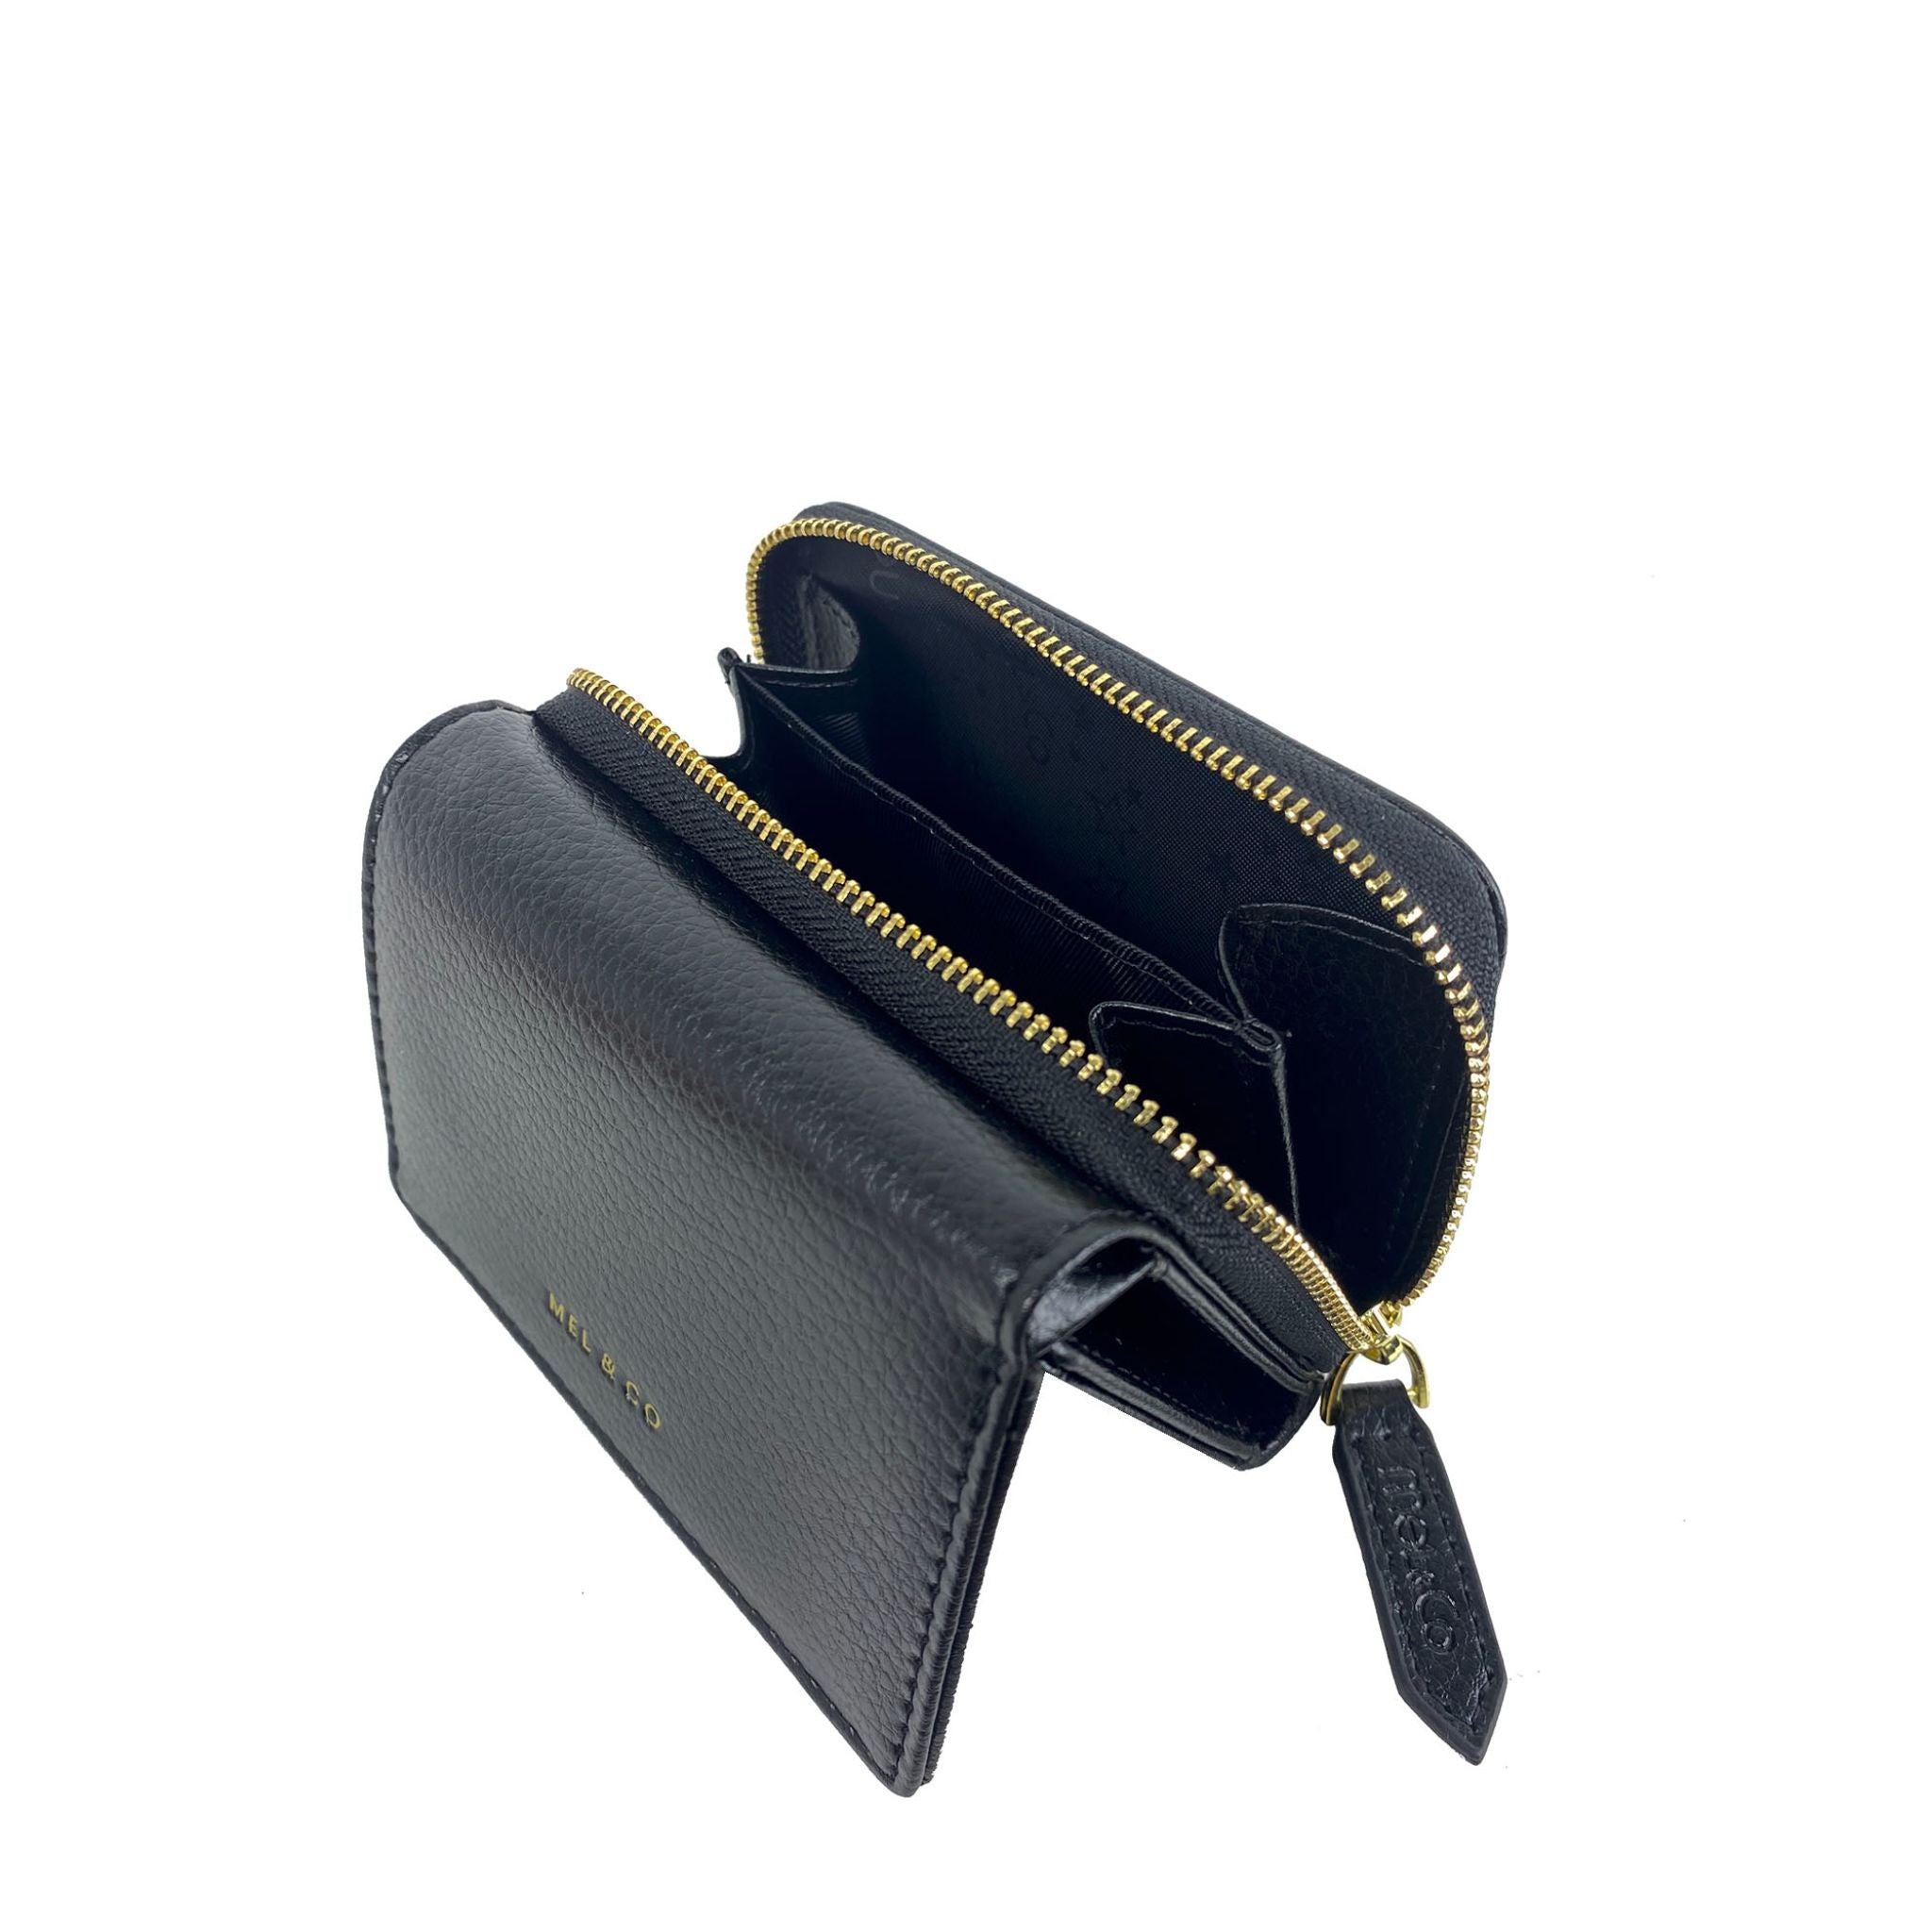 Mel&Co Pebbled Compact Tri-Fold Wallet Black